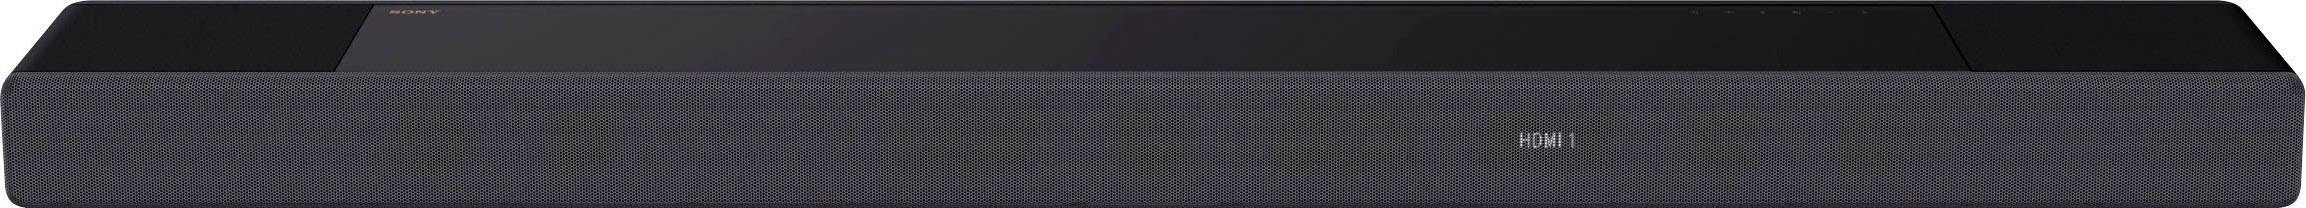 HT-A7000 Soundbar + SARS3S Res (Dolby Soundbar Atmos, High Sony Premium Rear-Speaker 7.1.2 Audio)